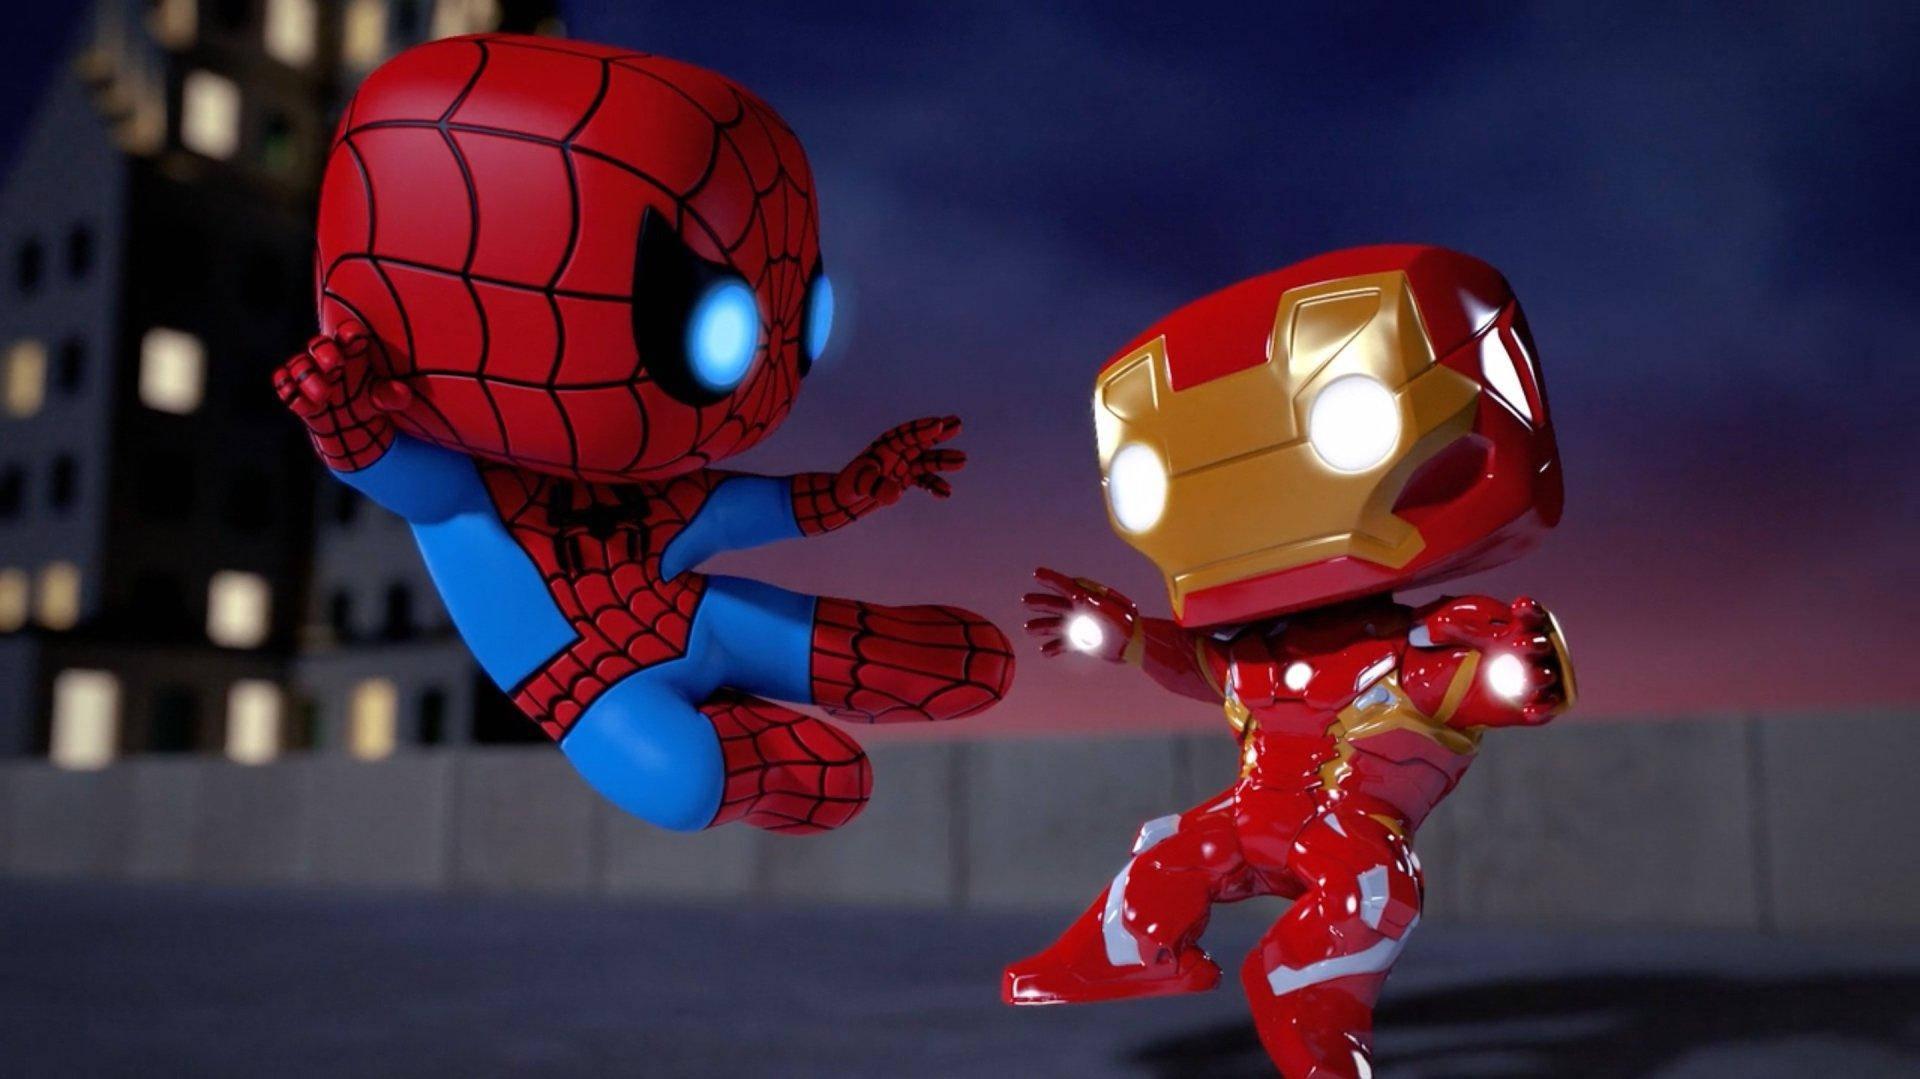 Download Funko Pop Spiderman And Iron Man Wallpaper